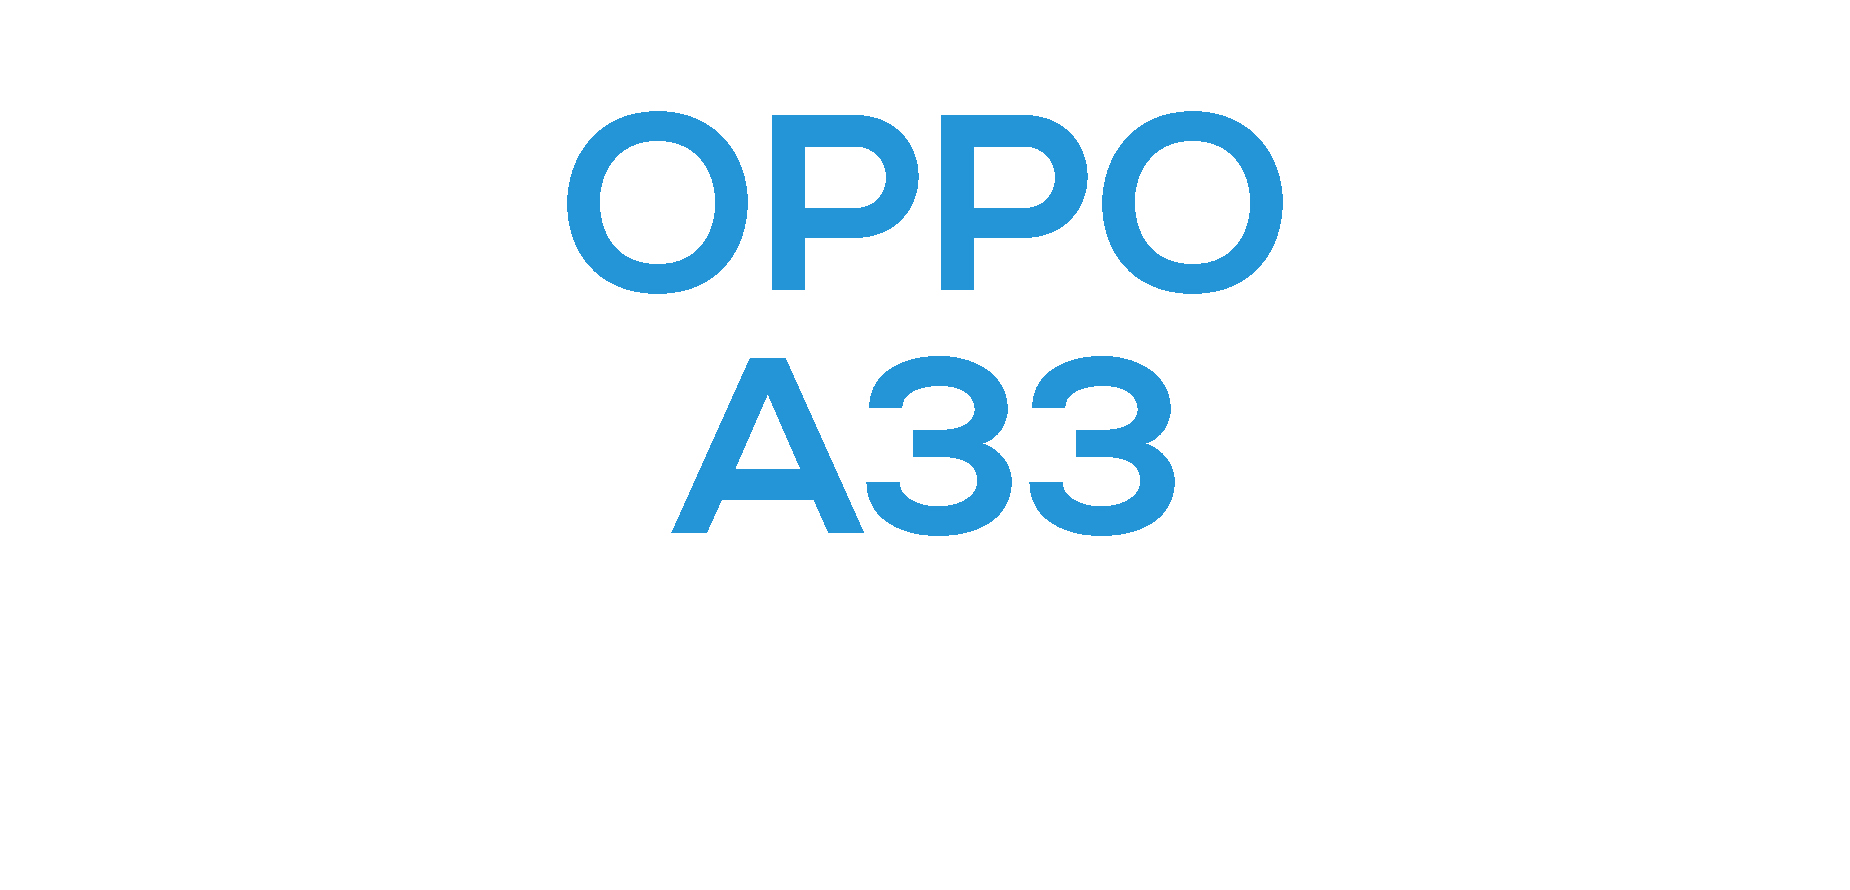 OPPO A33